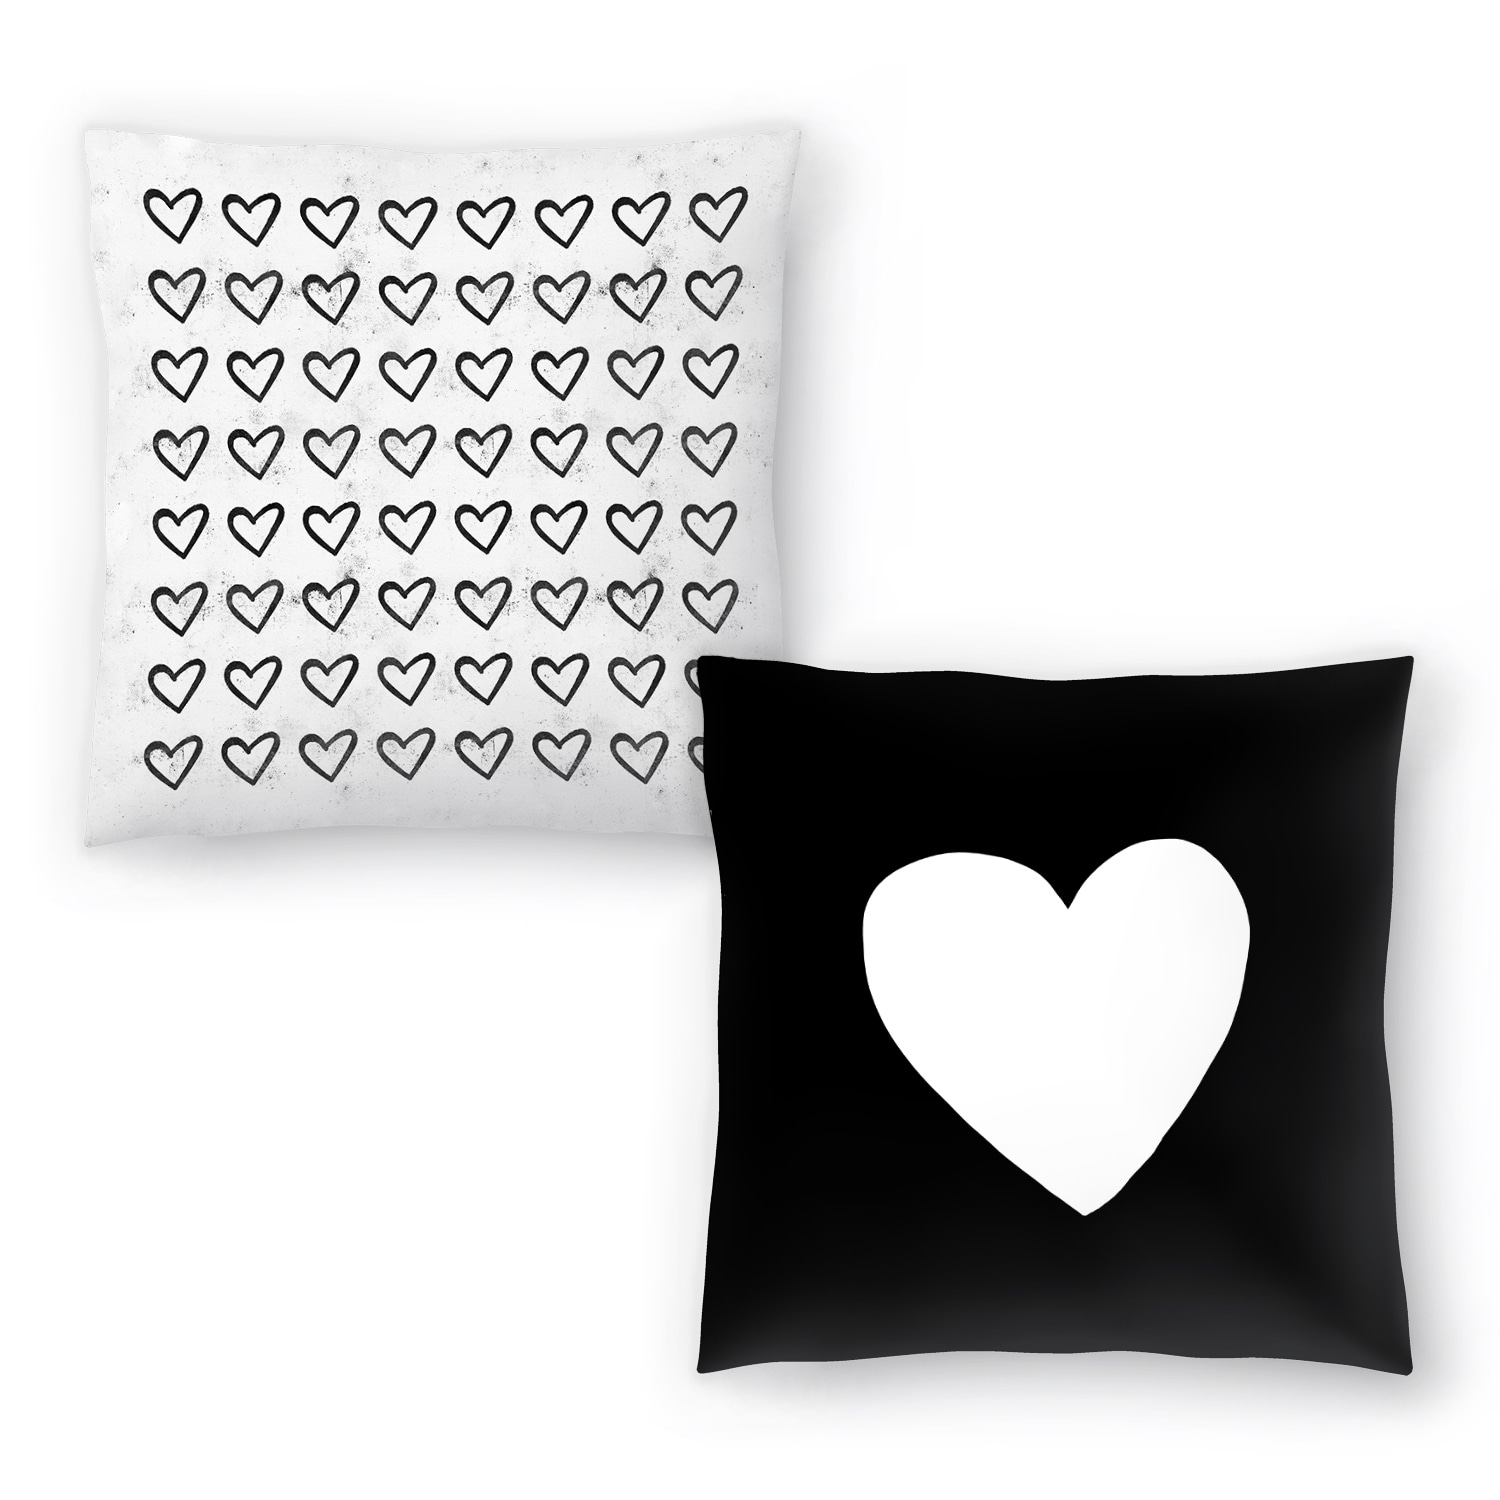 https://ak1.ostkcdn.com/images/products/is/images/direct/0cec8b6a2b09dcc4413c052d77d3adbf85e1c63e/Big-Heart-and-Big-Heart-Ink-Splatter---Set-of-2-Decorative-Pillows.jpg